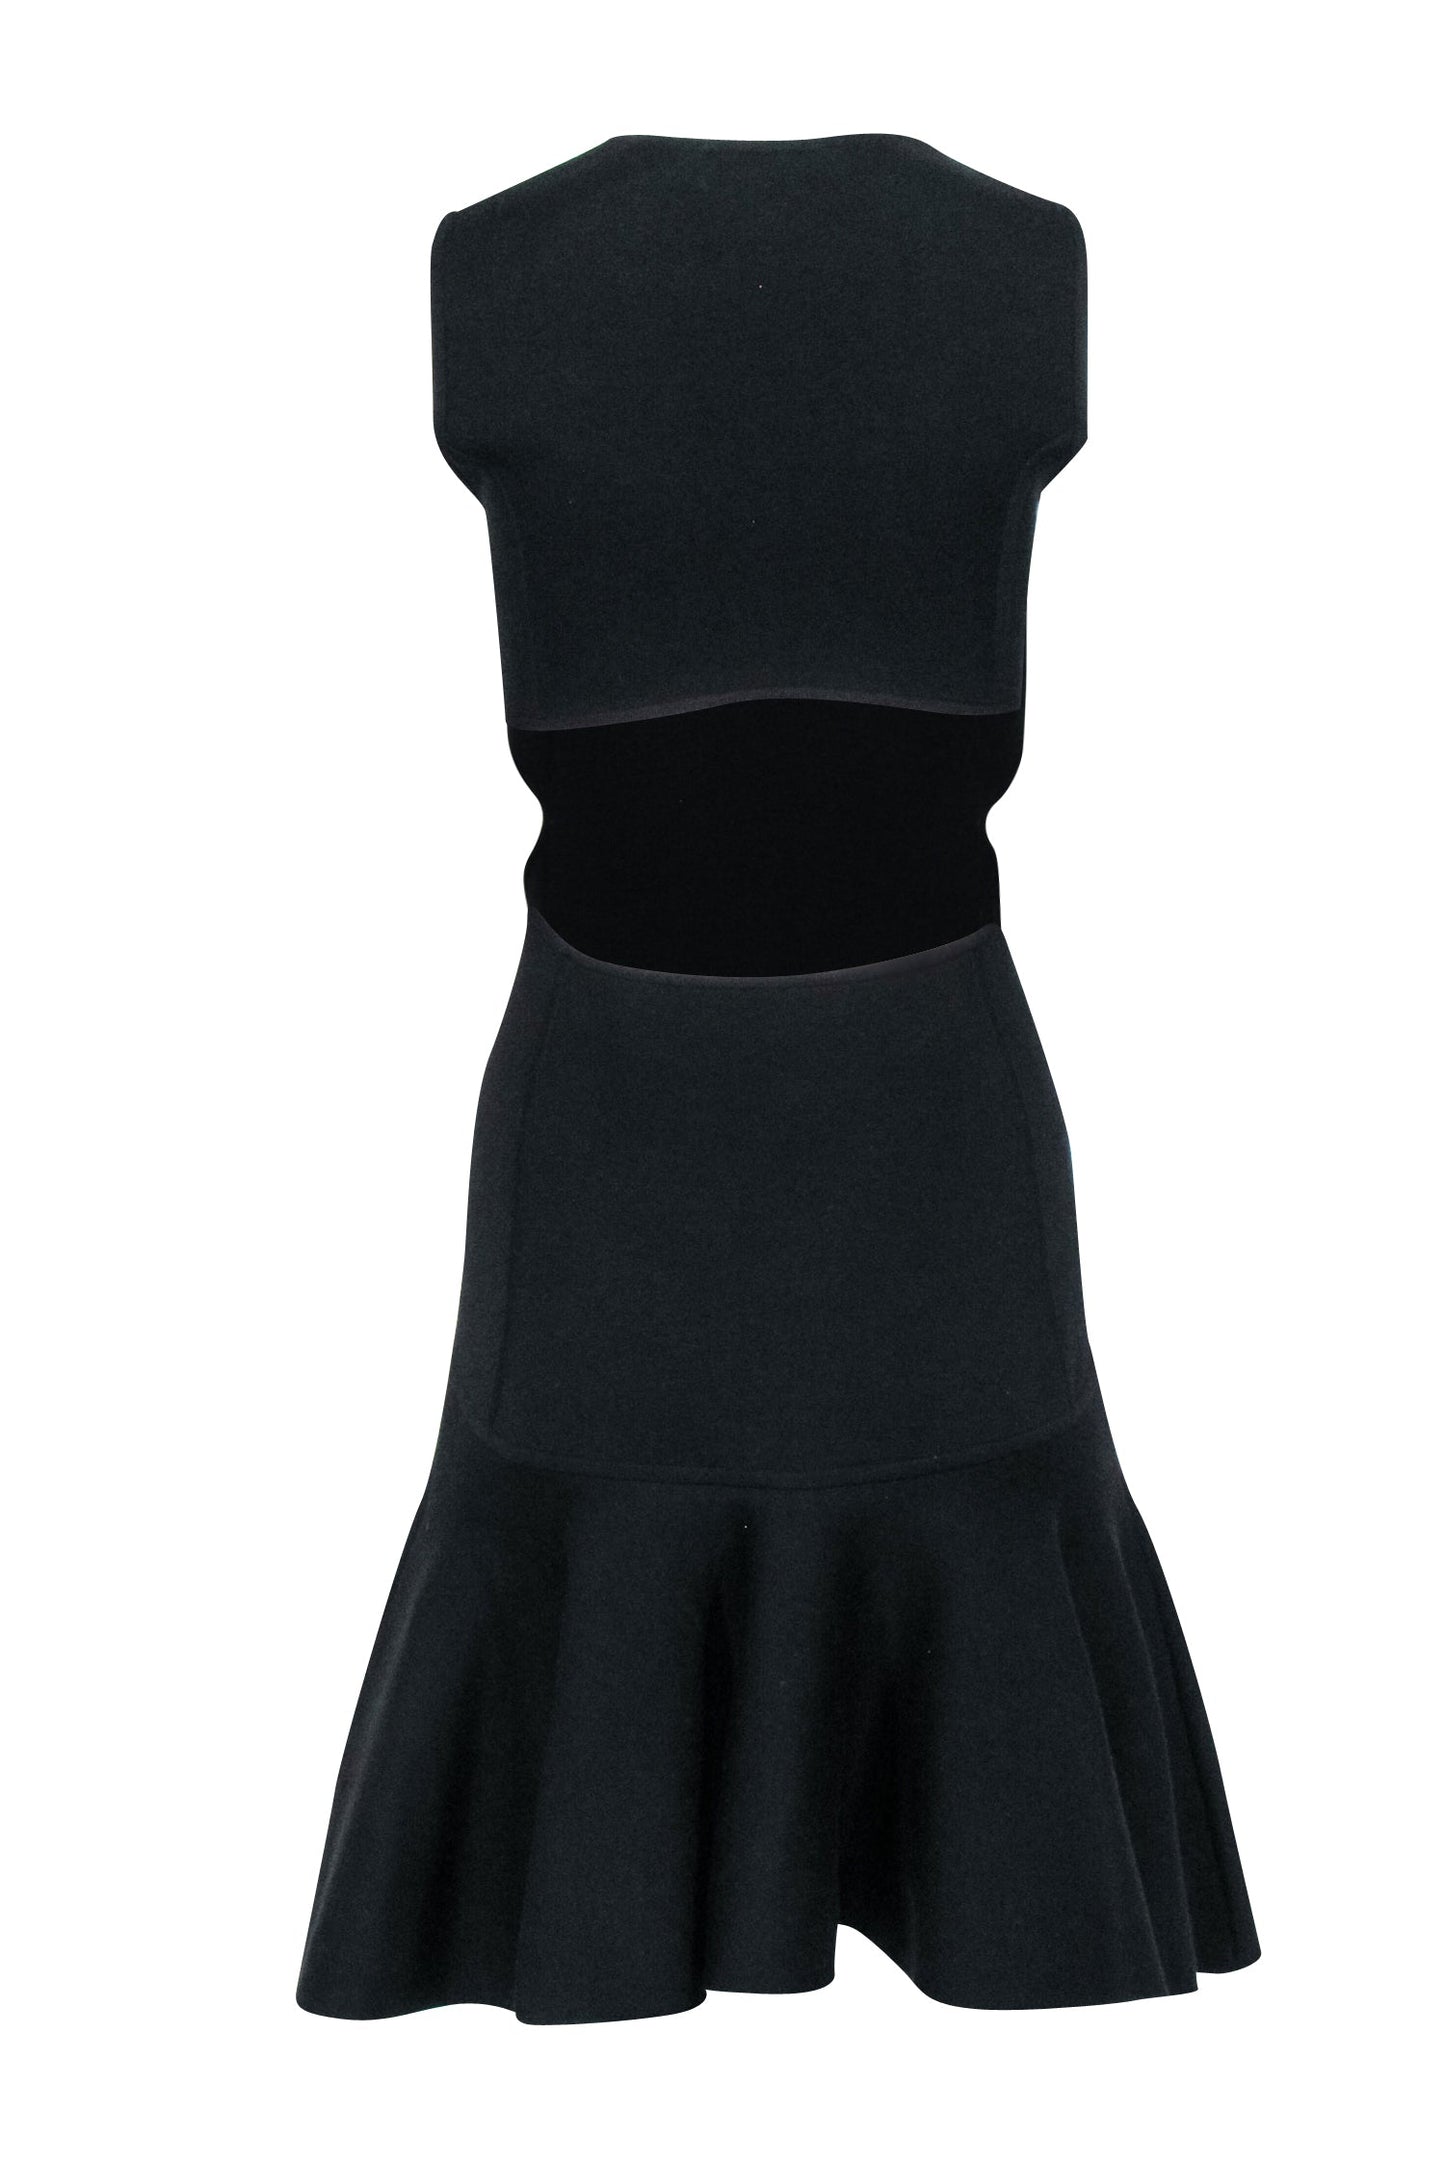 Michael Kors - Black Knit Sleeveless Open Back Dress Sz S